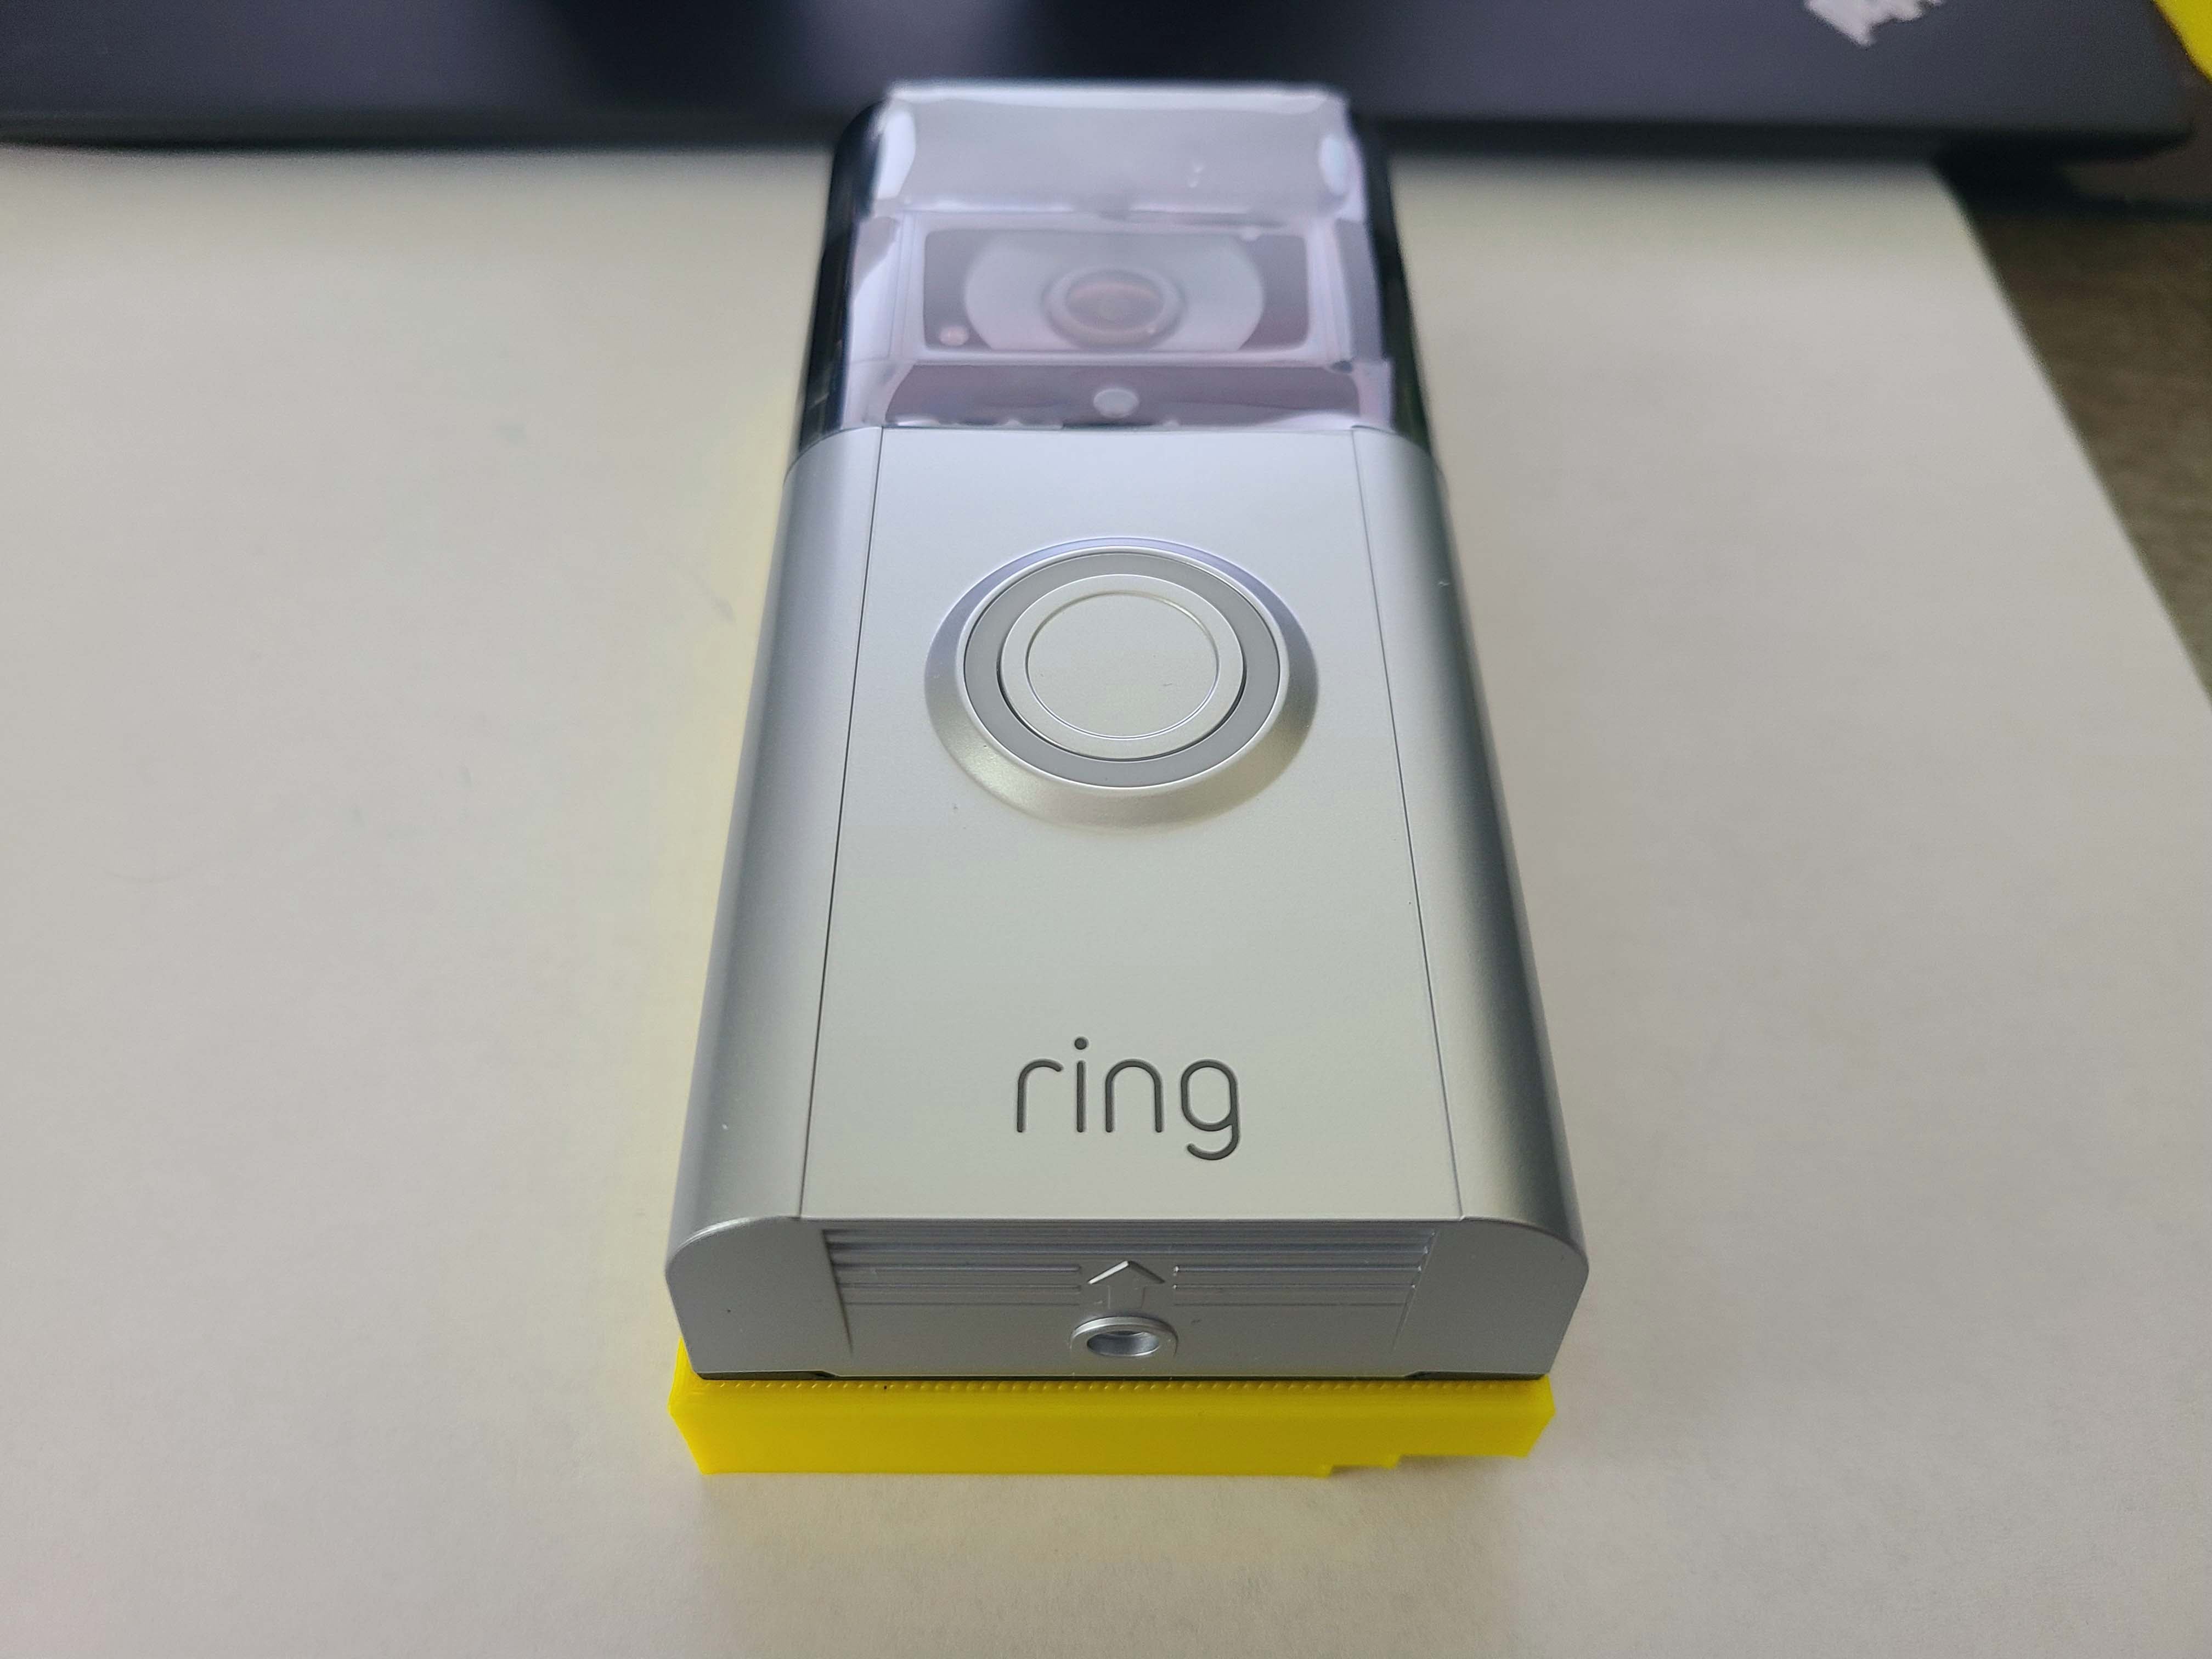 Ring 3 Video Doorbell 3 Plus mounting plate